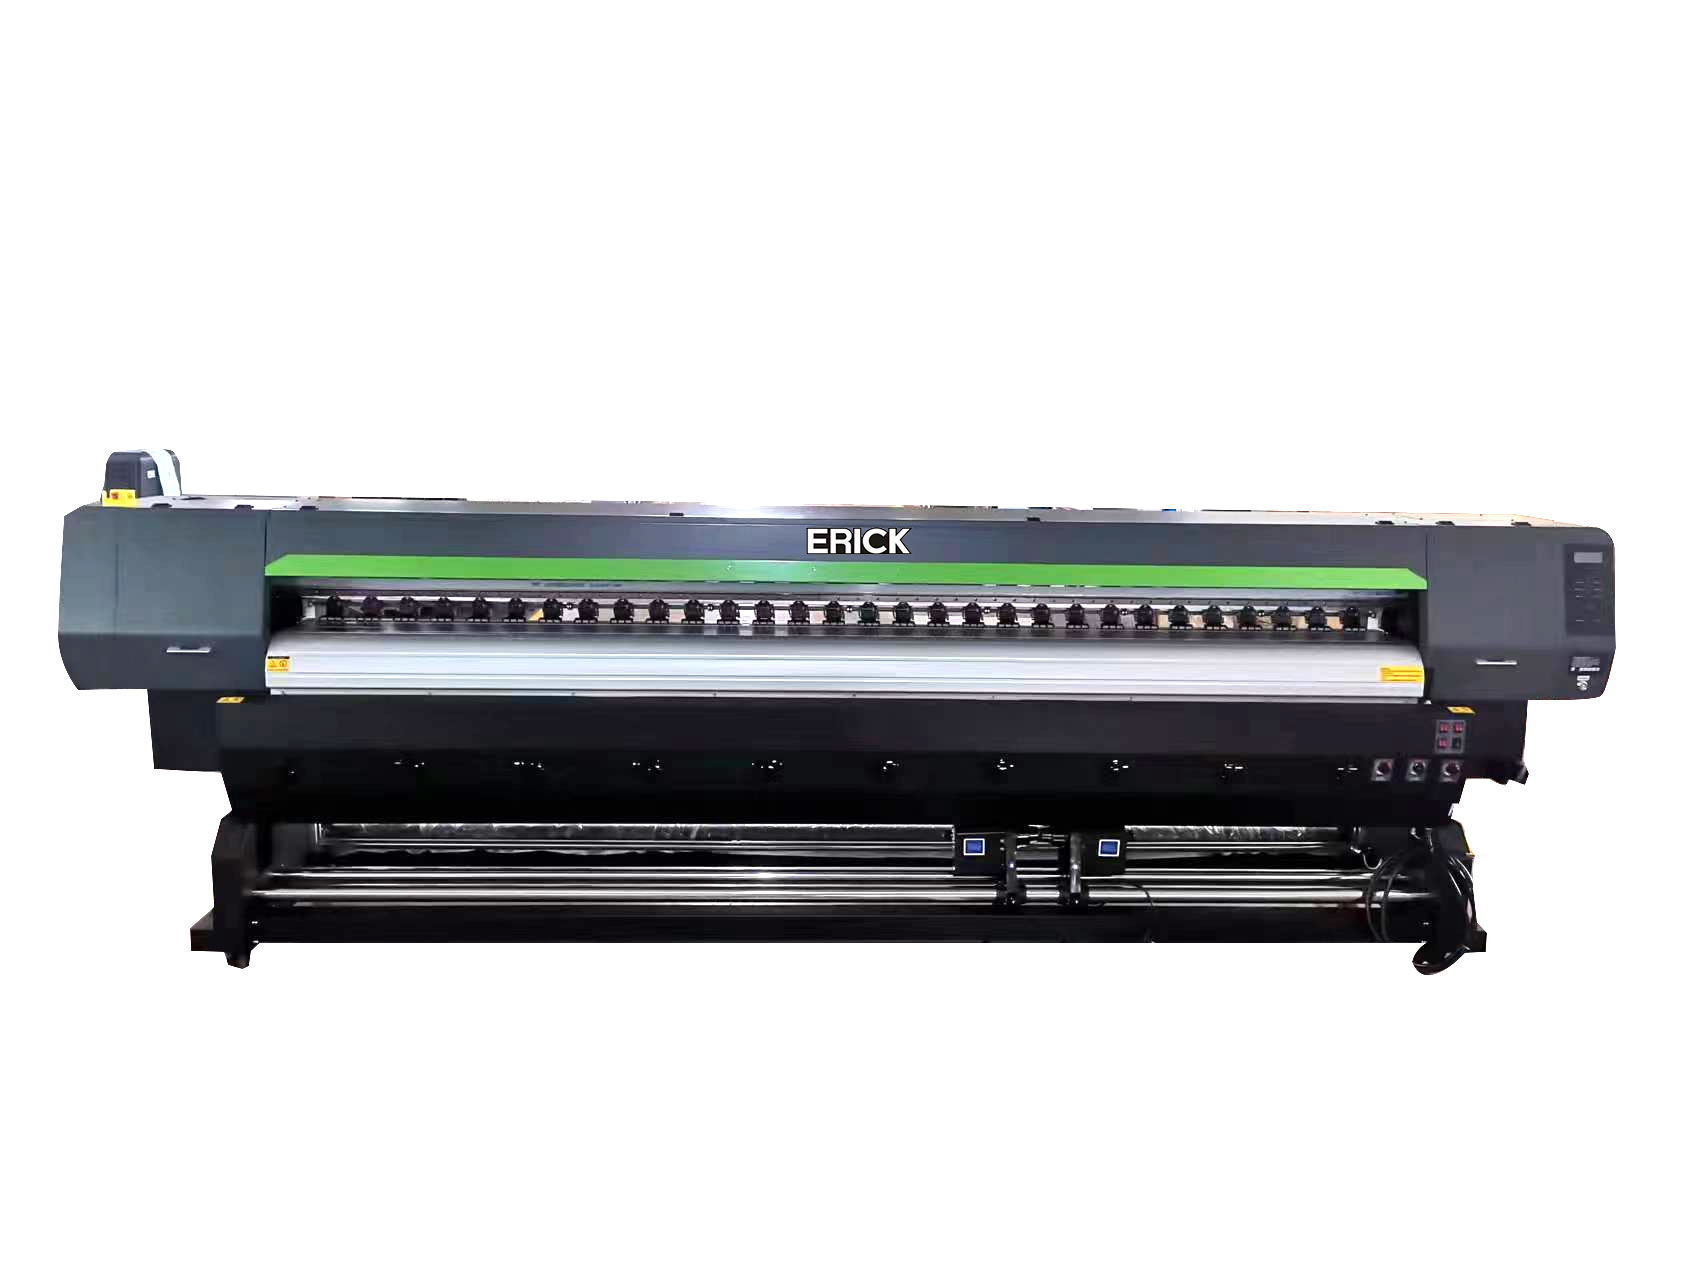 Fabrieks 3.2 meter EP-I3200 E1 * 2pc groot formaat eko oplosmiddel plotter drukmasjien digitale drukker